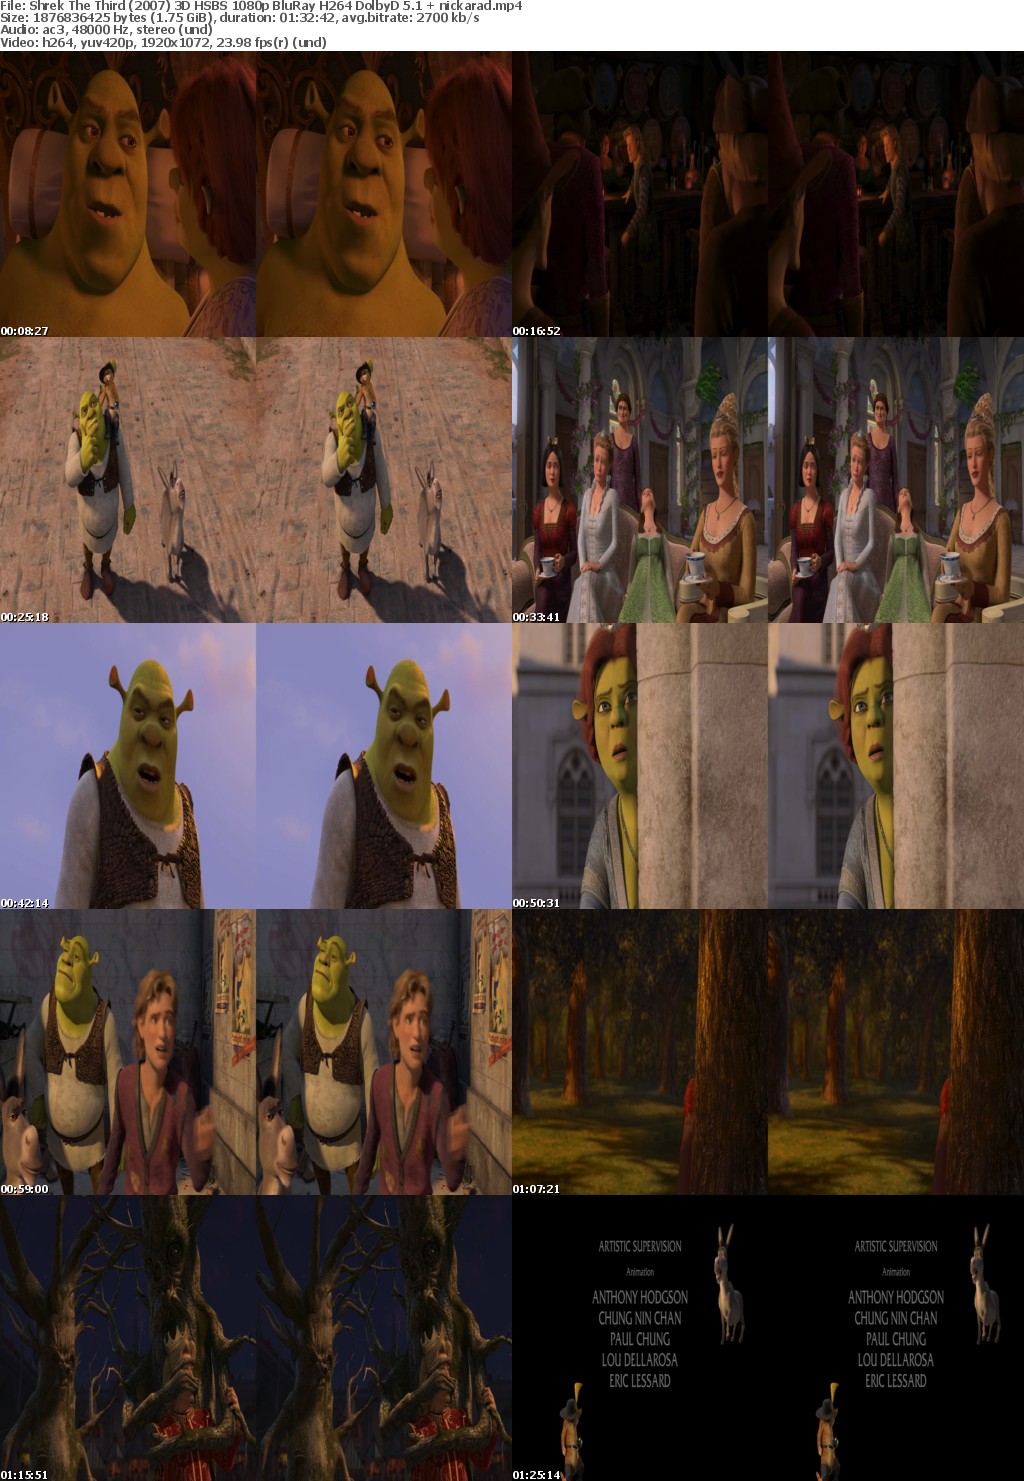 Shrek The Third (2007) 3D HSBS 1080p BluRay H264 DolbyD 5 1 nickarad